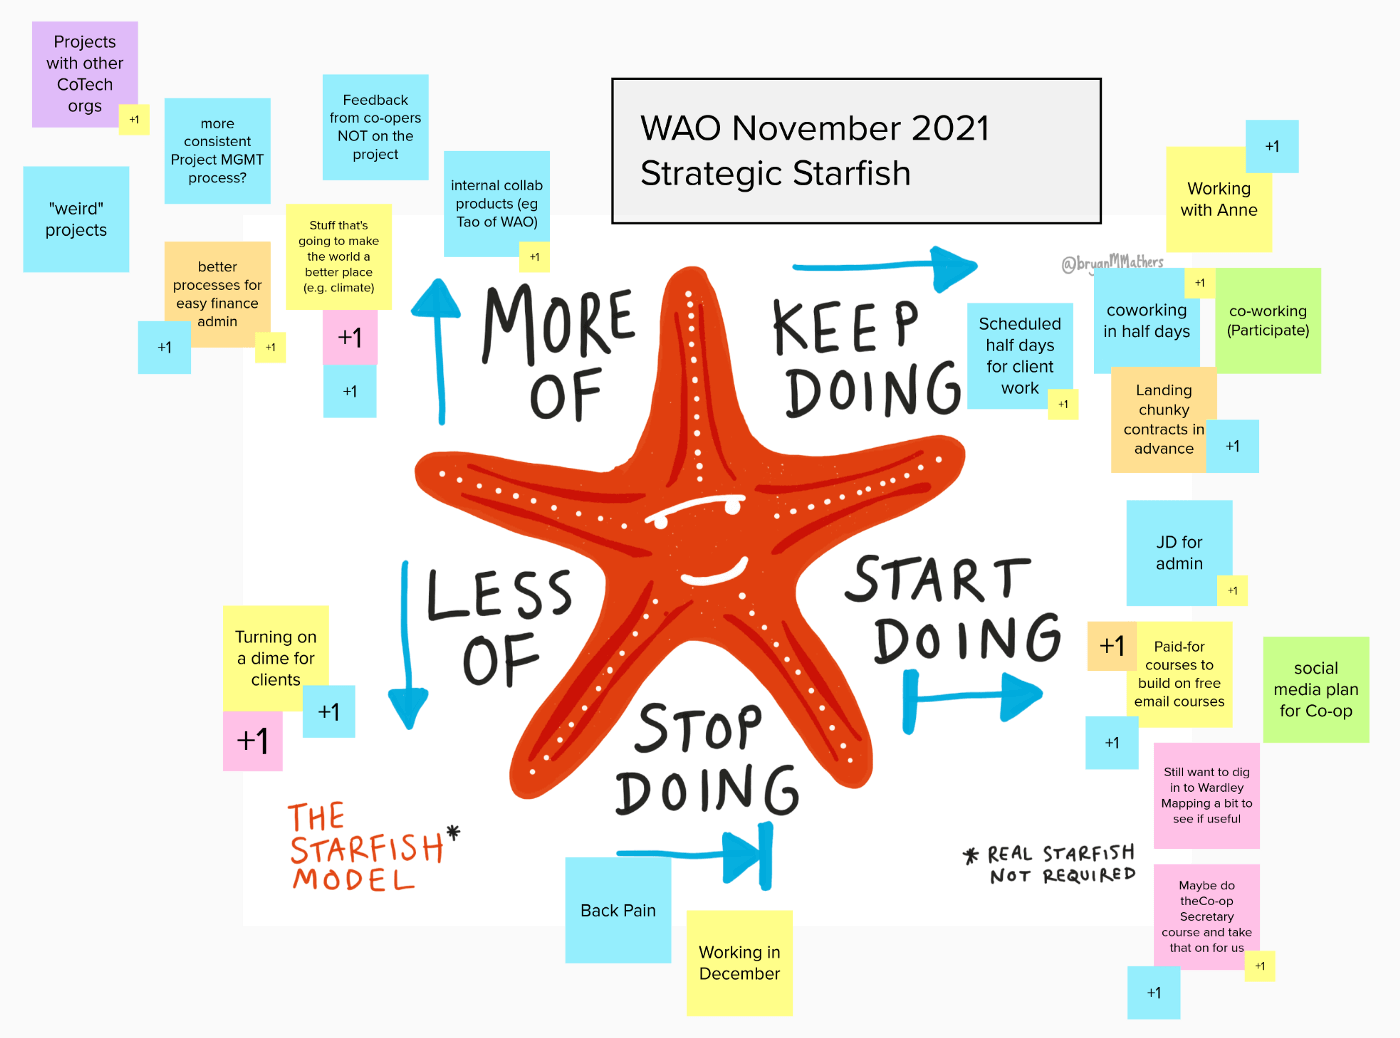 Starfish Model - WAO Strategic retrospective